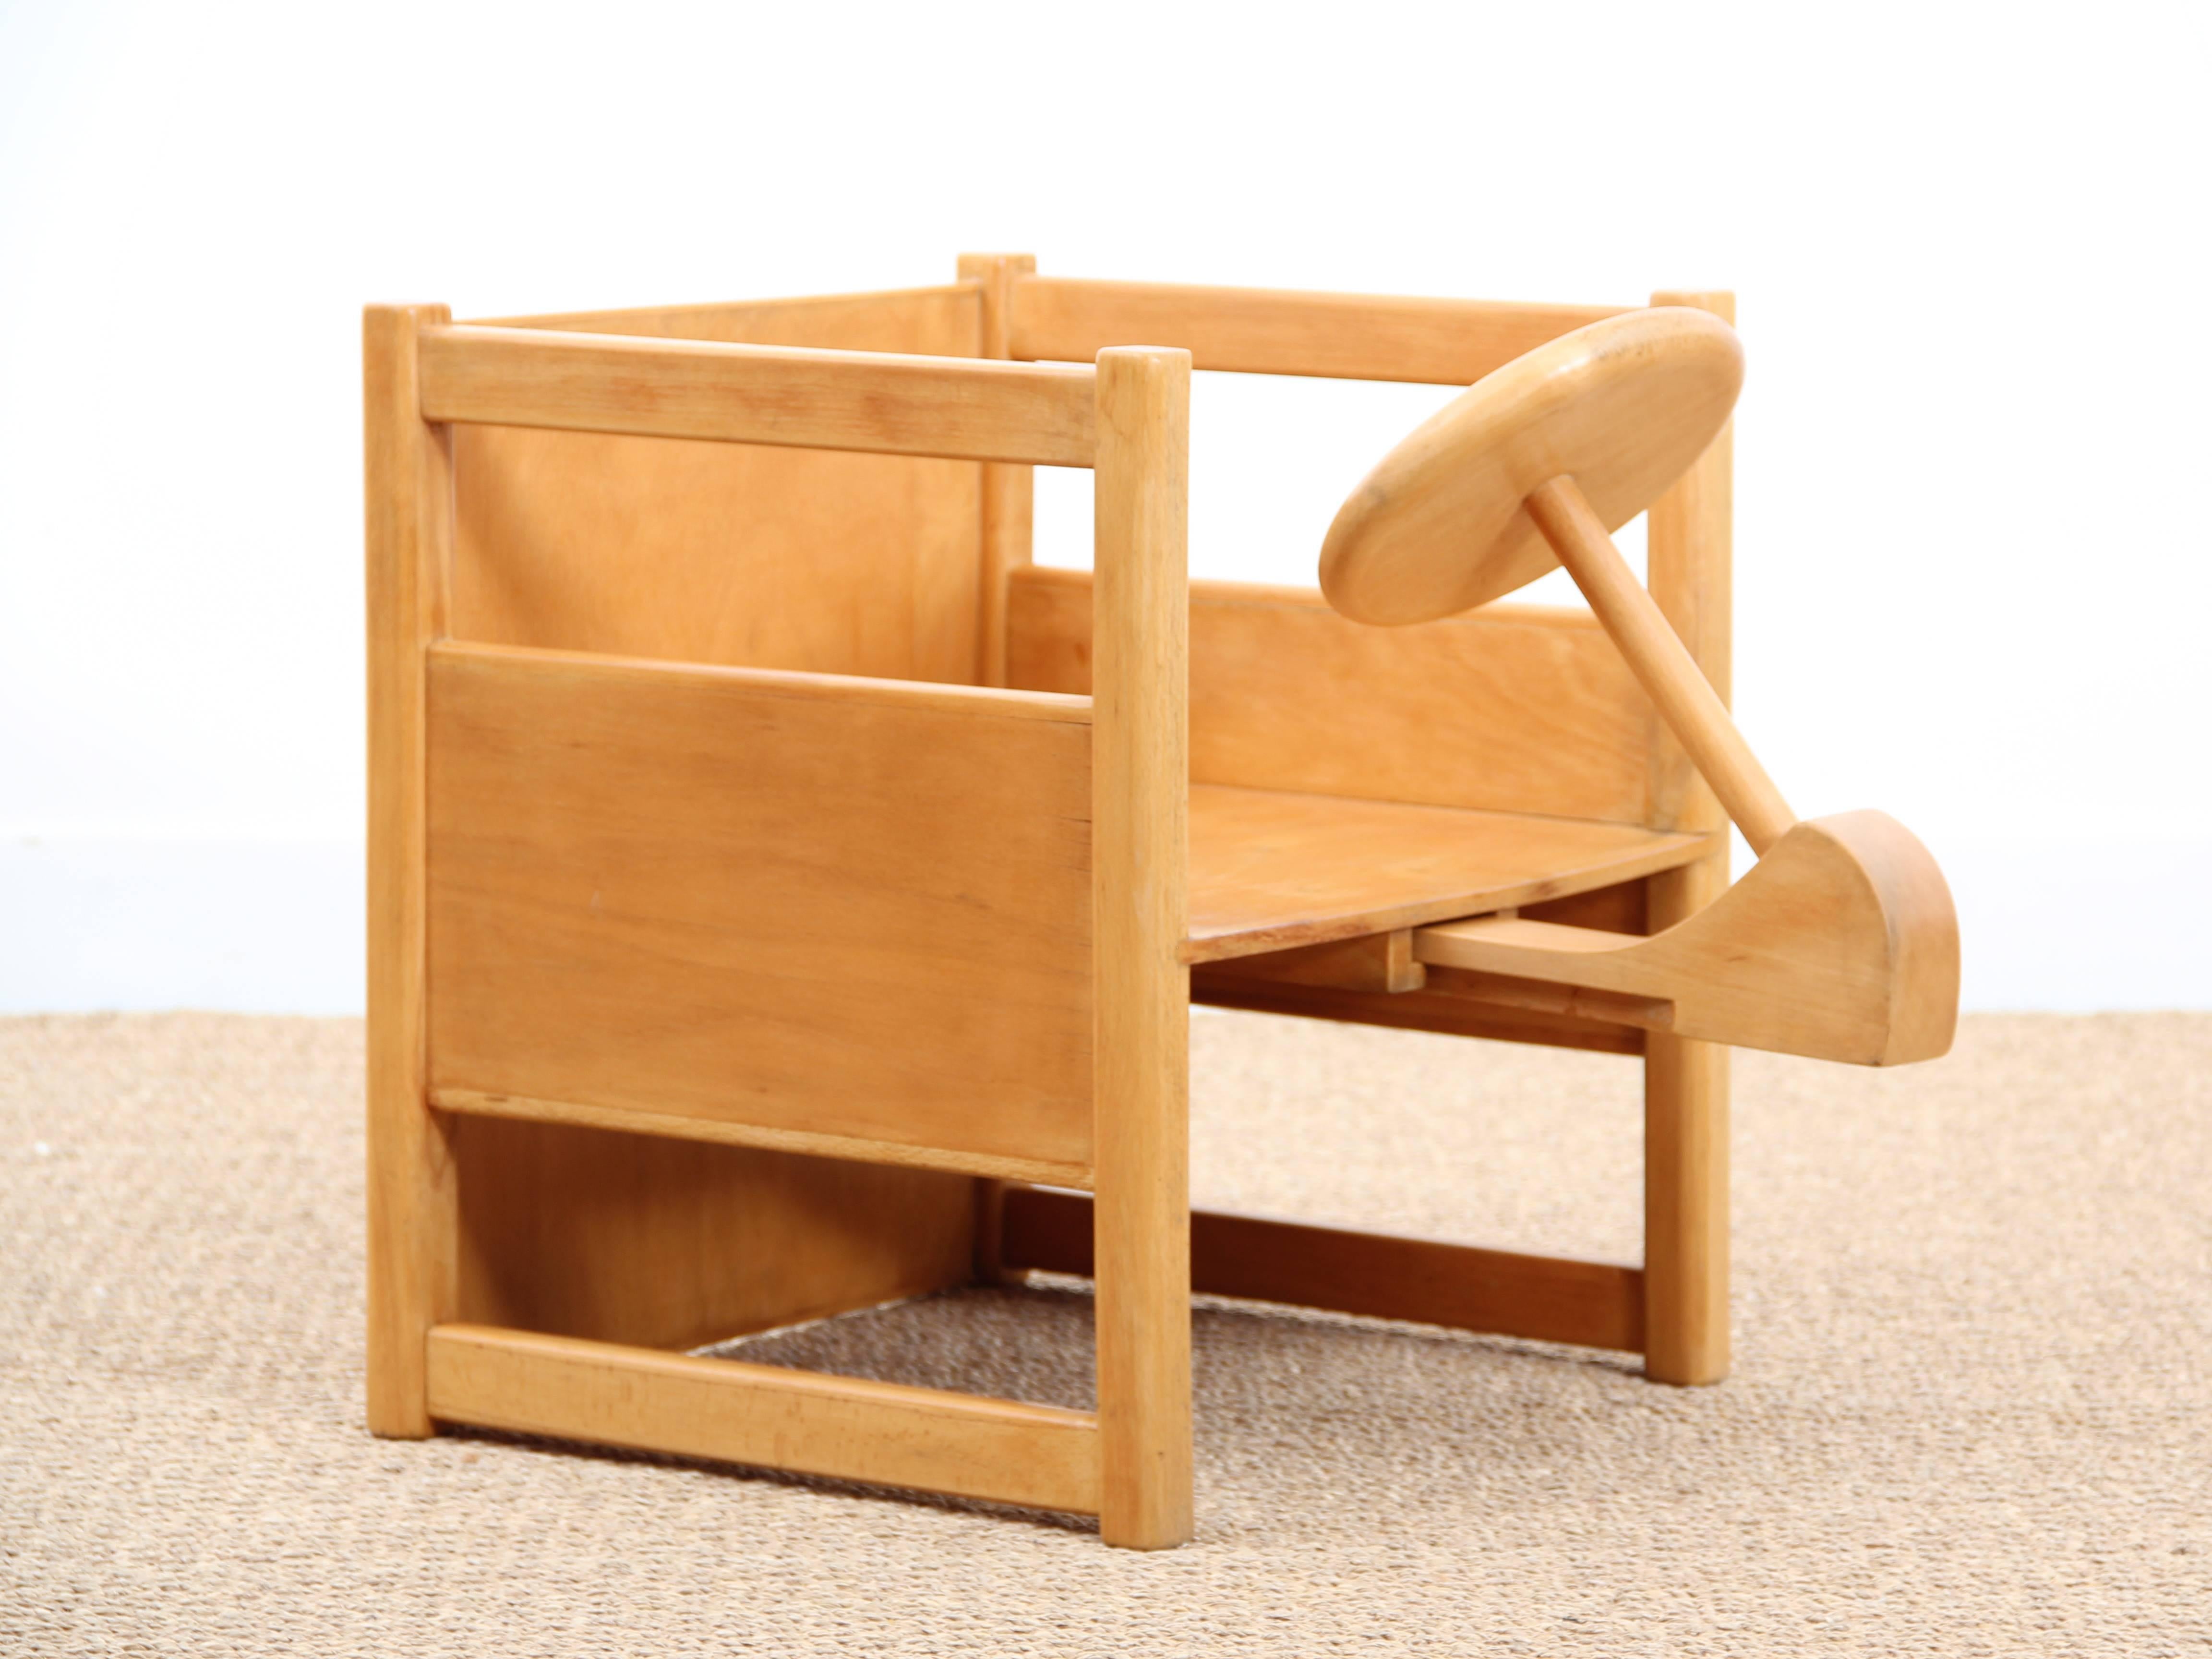 Mid-20th Century Scandinavian Reversable Table and Chair for Children, Designed by Kay Bojesen